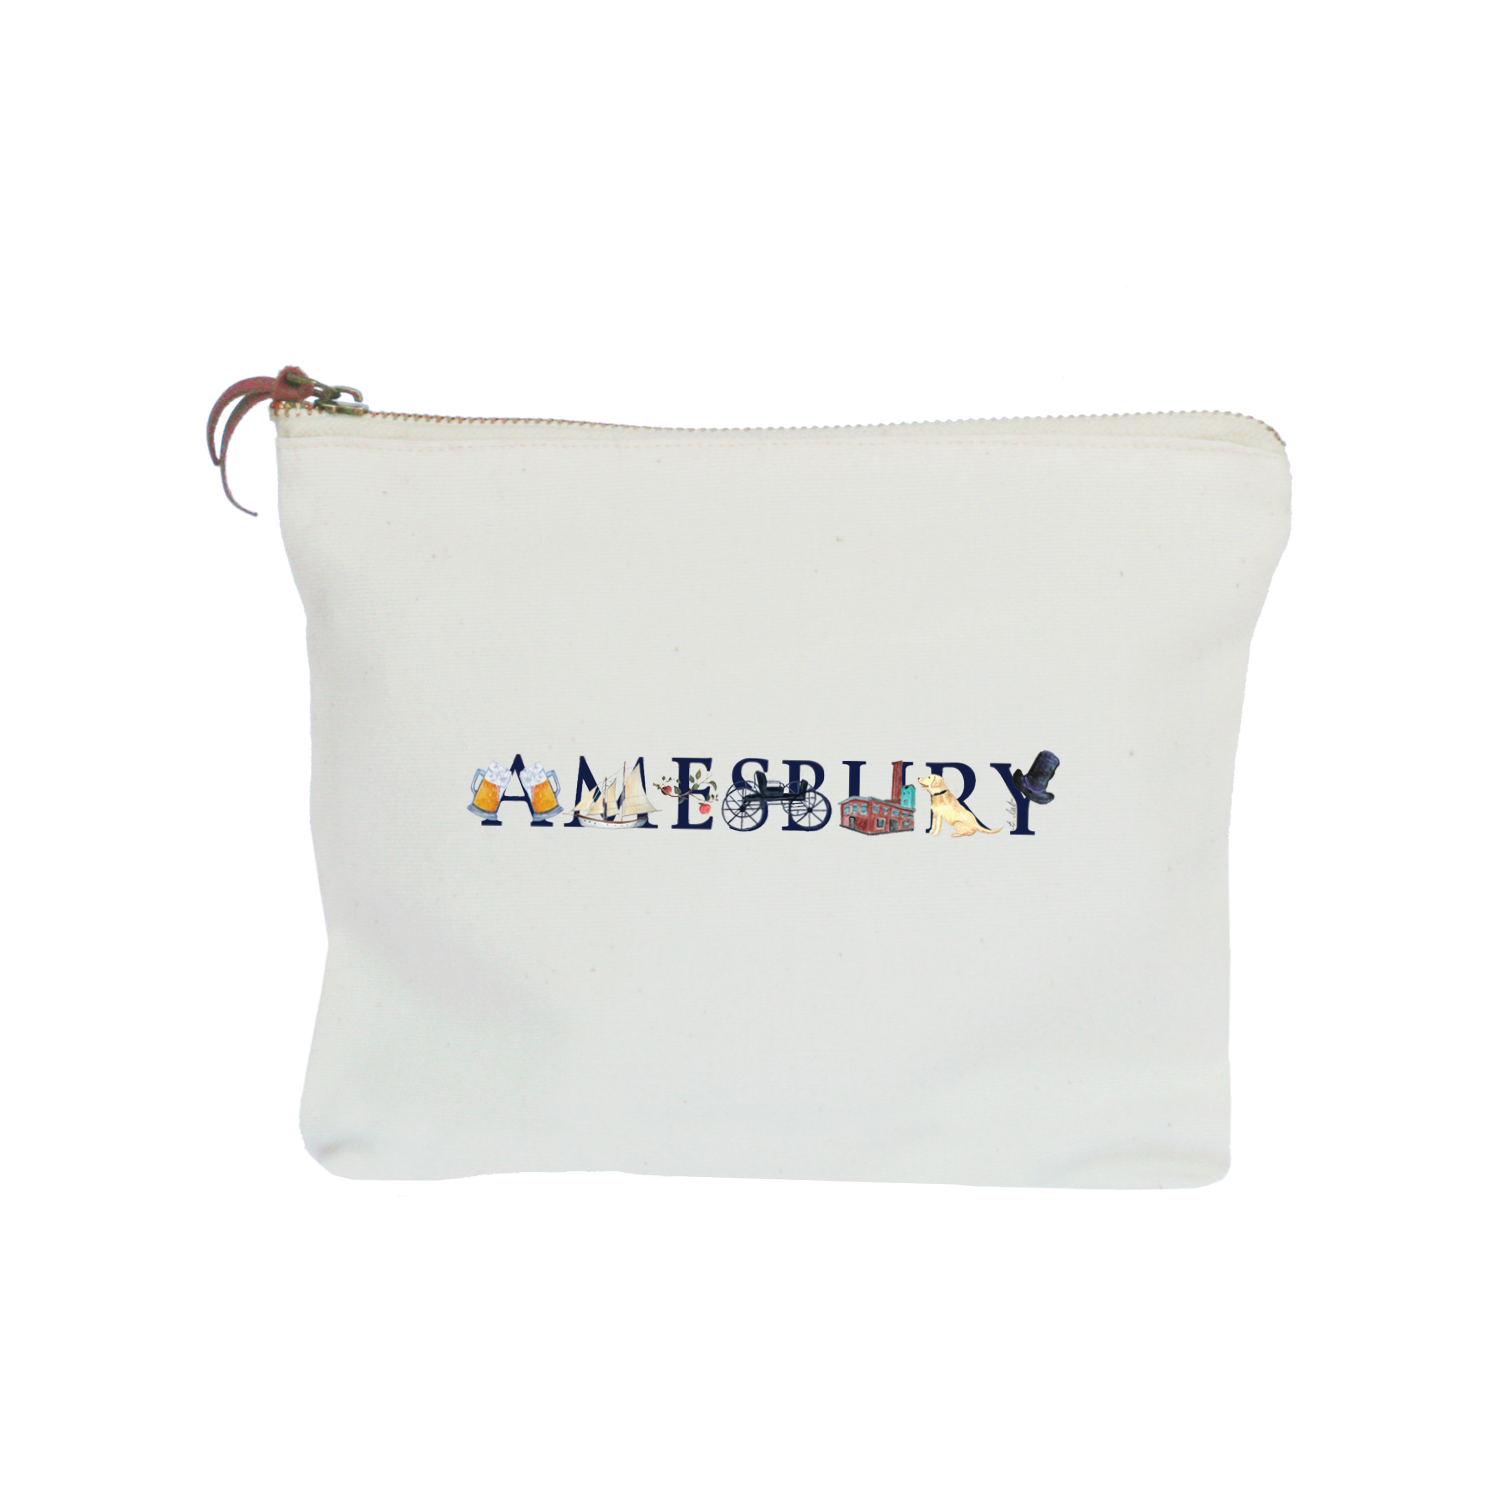 amesbury zipper pouch